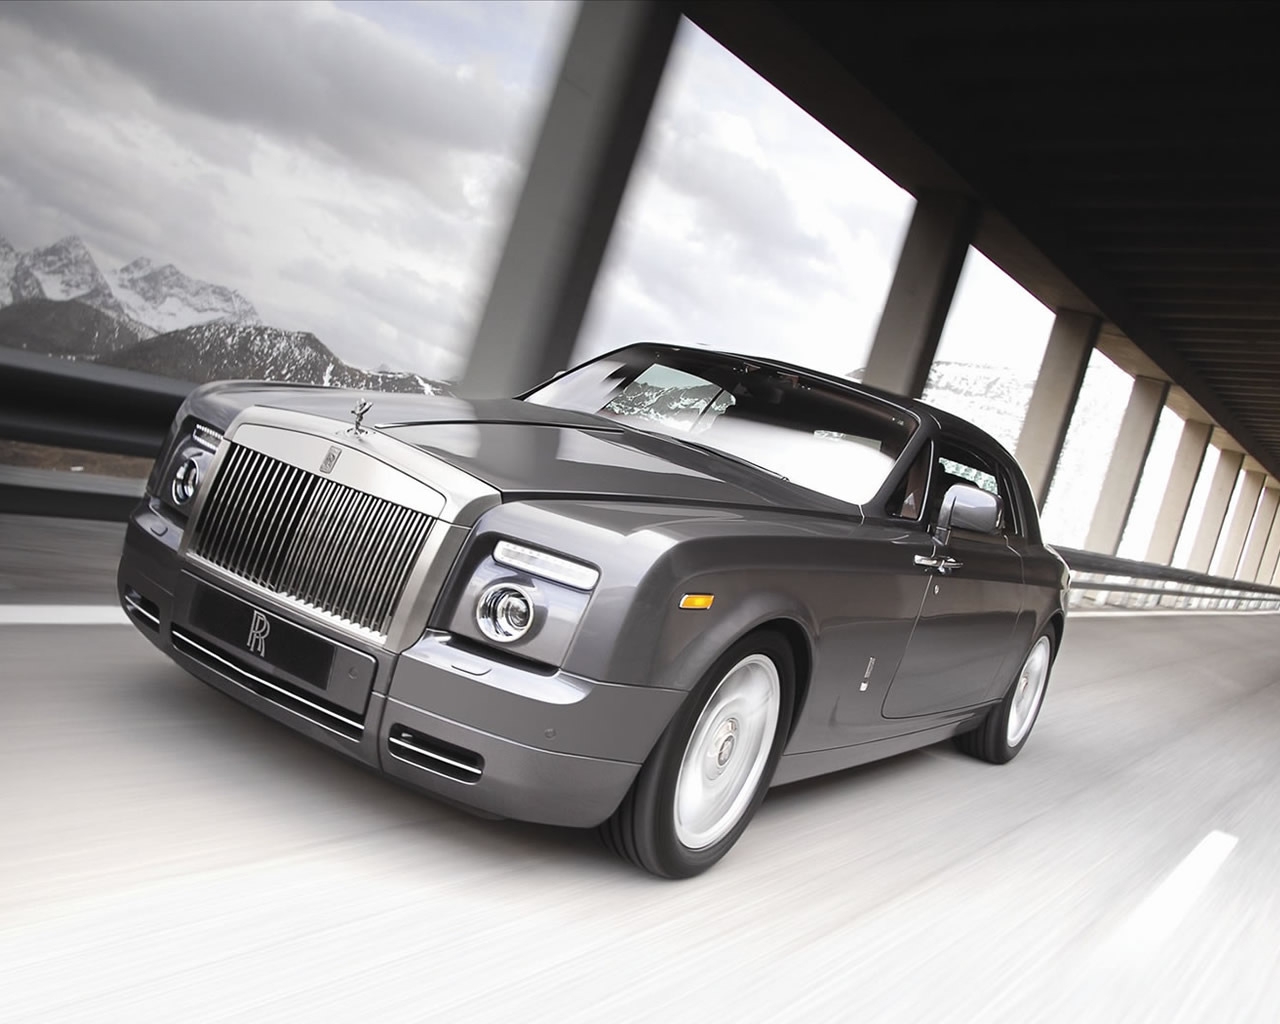 Superb Silver Rolls Royce for 1280 x 1024 resolution